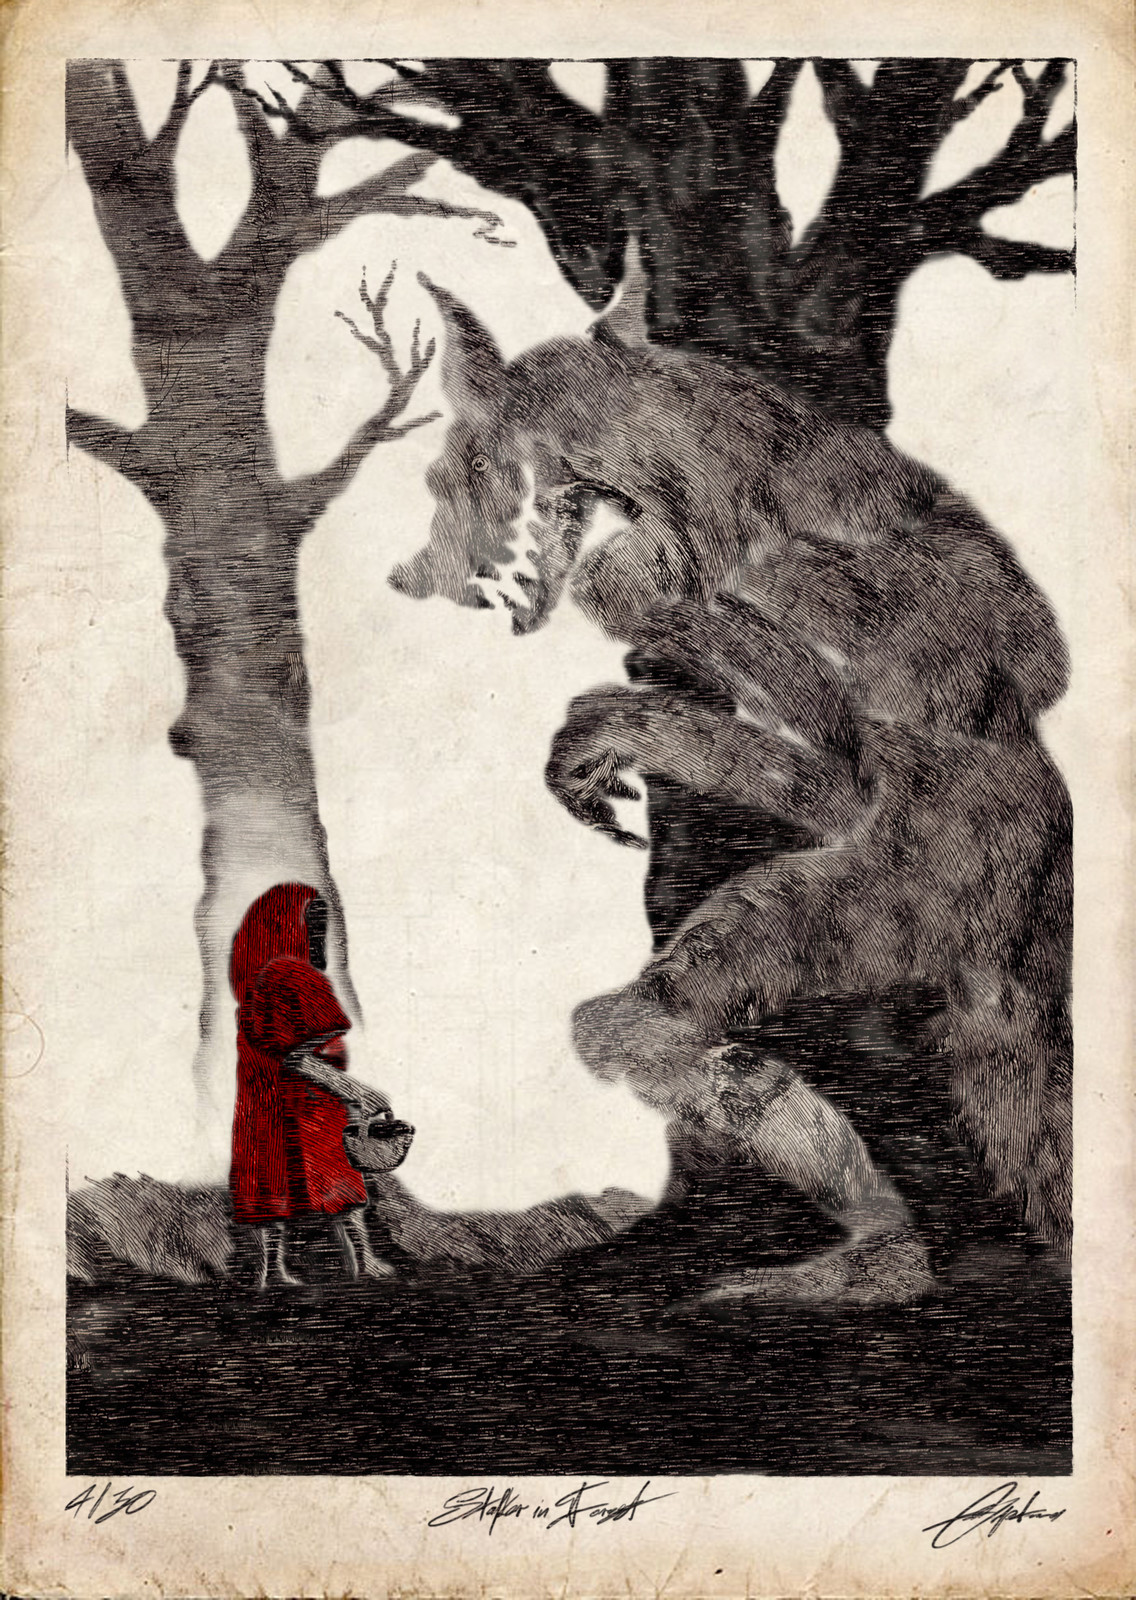 Pawel Kot - The Red Hood Story